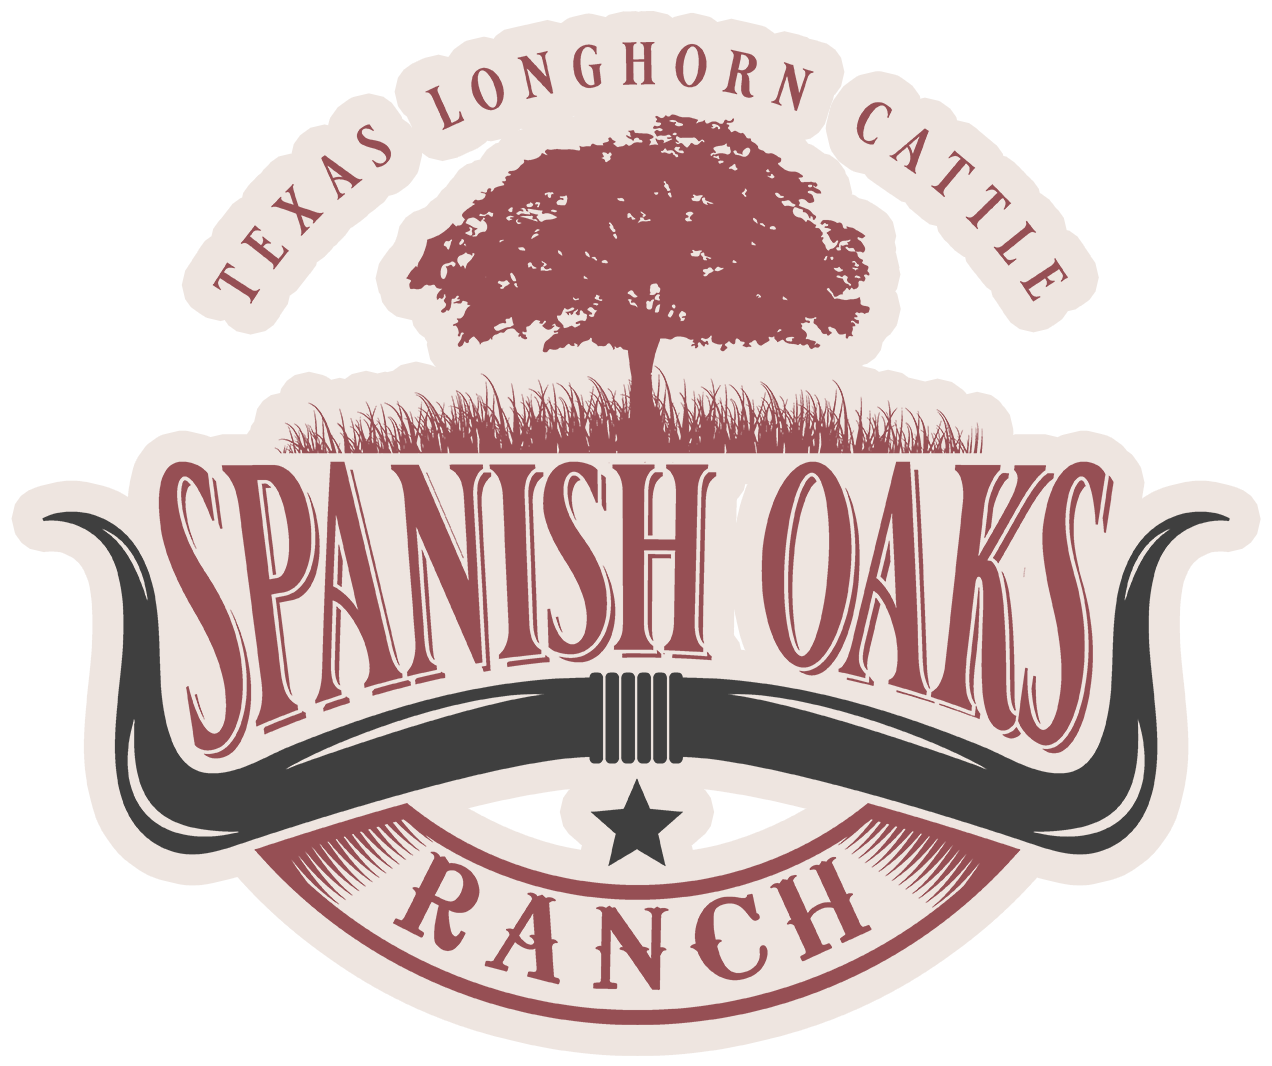 Spanish Oaks Ranch logo